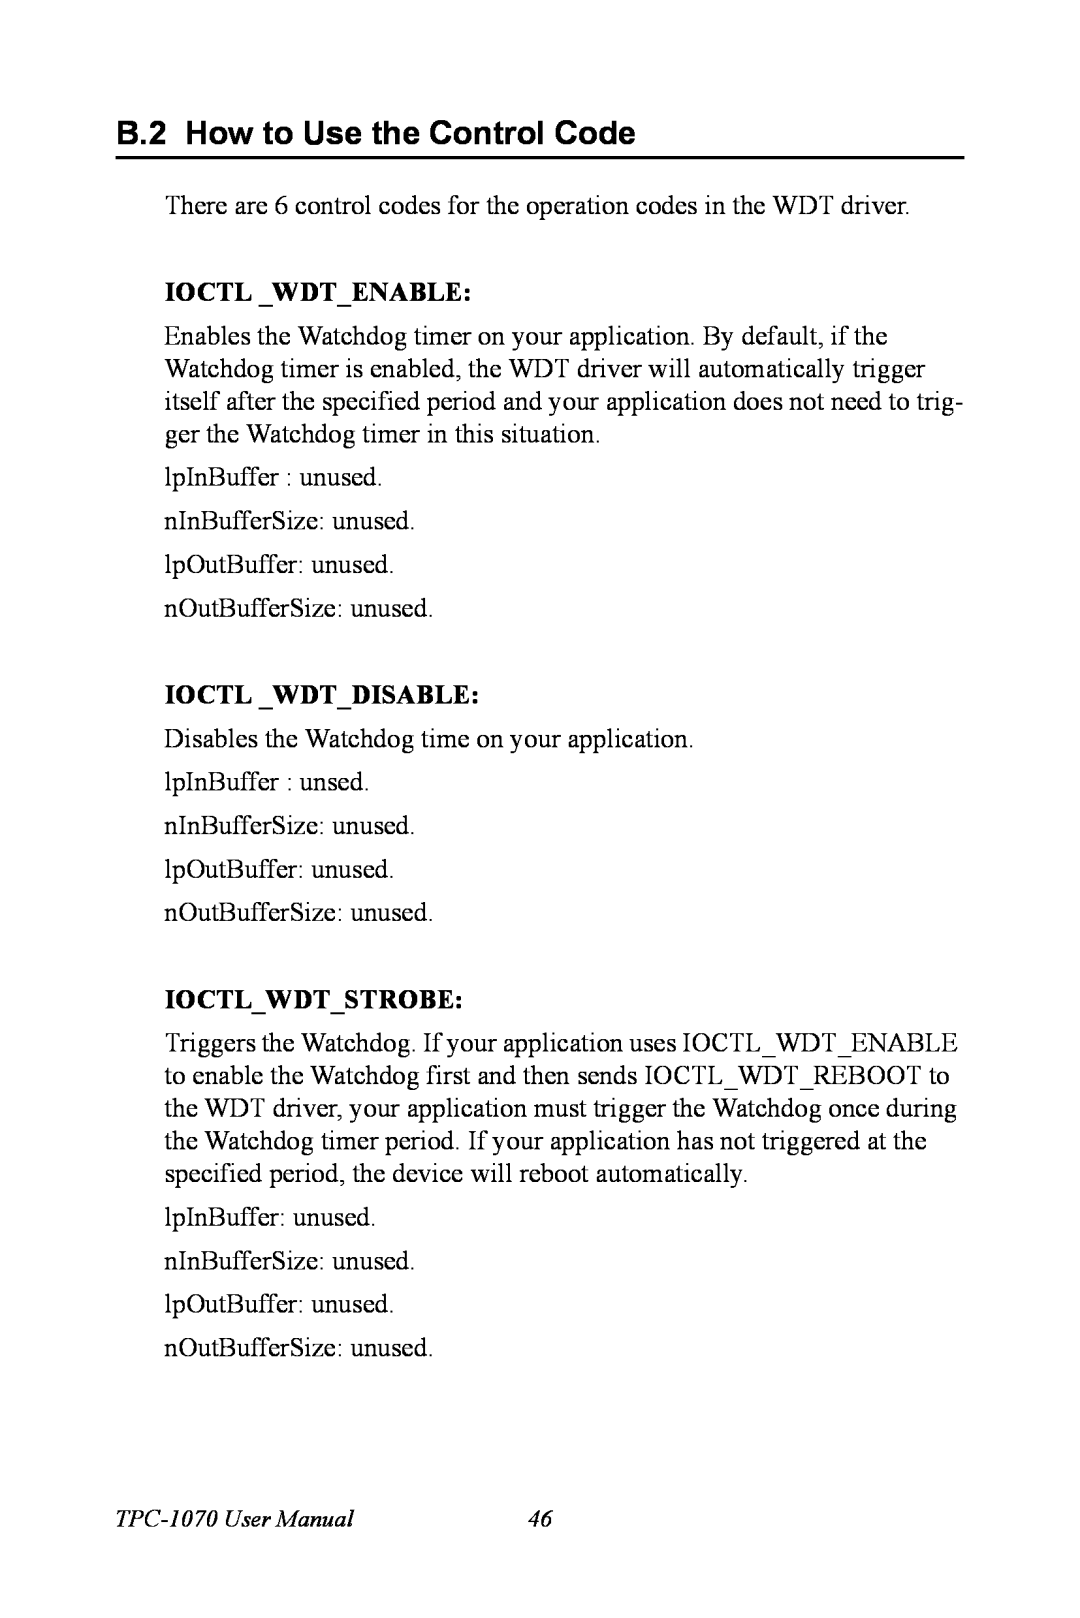 Intel TPC-1070 user manual B.2 How to Use the Control Code, Ioctl Wdtenable, Ioctl Wdtdisable, Ioctlwdtstrobe 